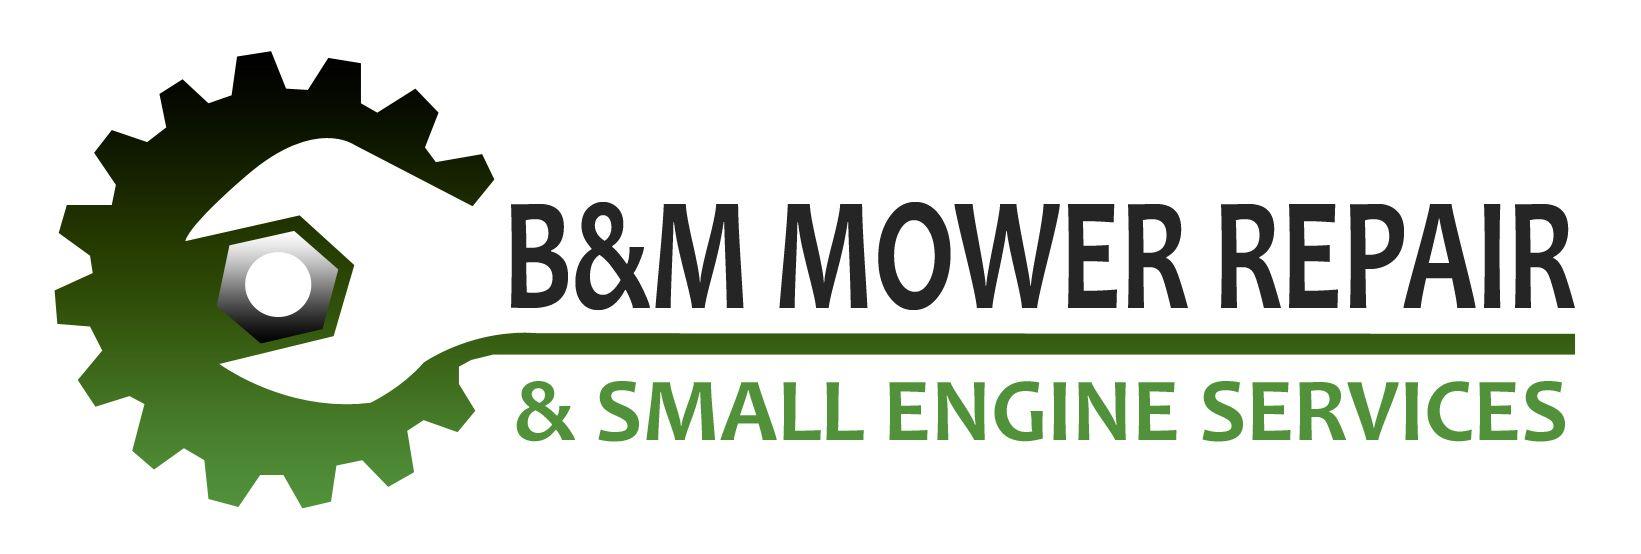 Lawn Mower Repair Service Logo - B & M Mower Repair – Your friendly engine and lawn equipment service ...